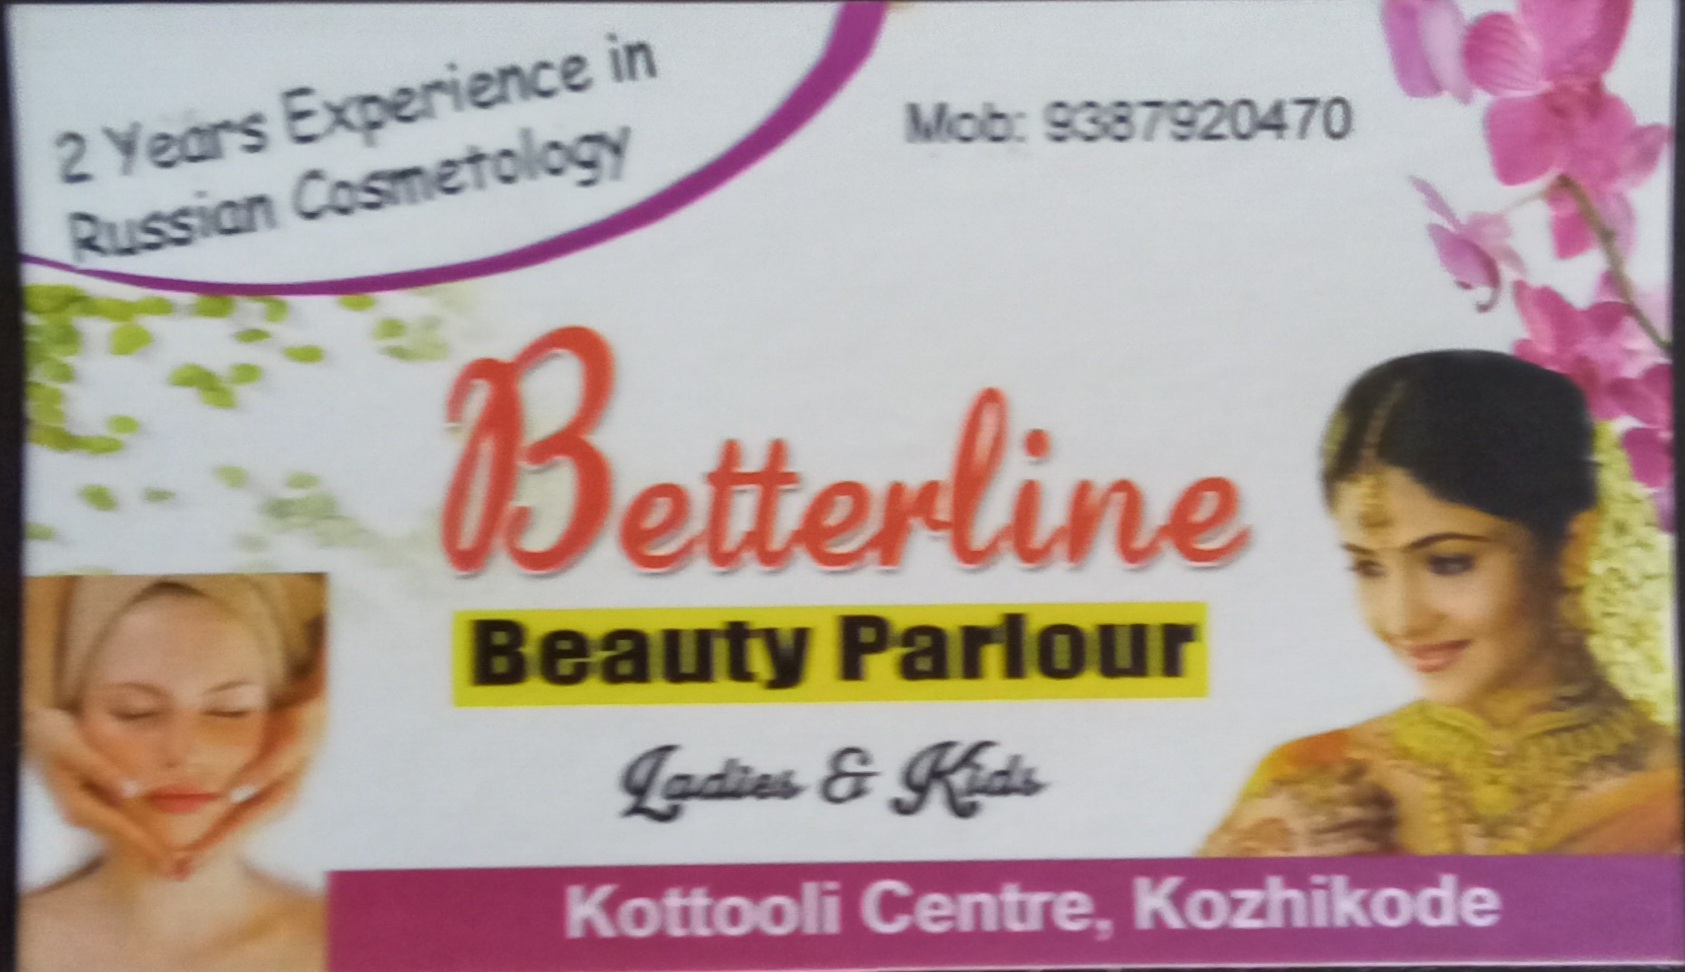 BETTERLINE BEAUTY PARLOUR, BEAUTY PARLOUR,  service in Kottooli, Kozhikode